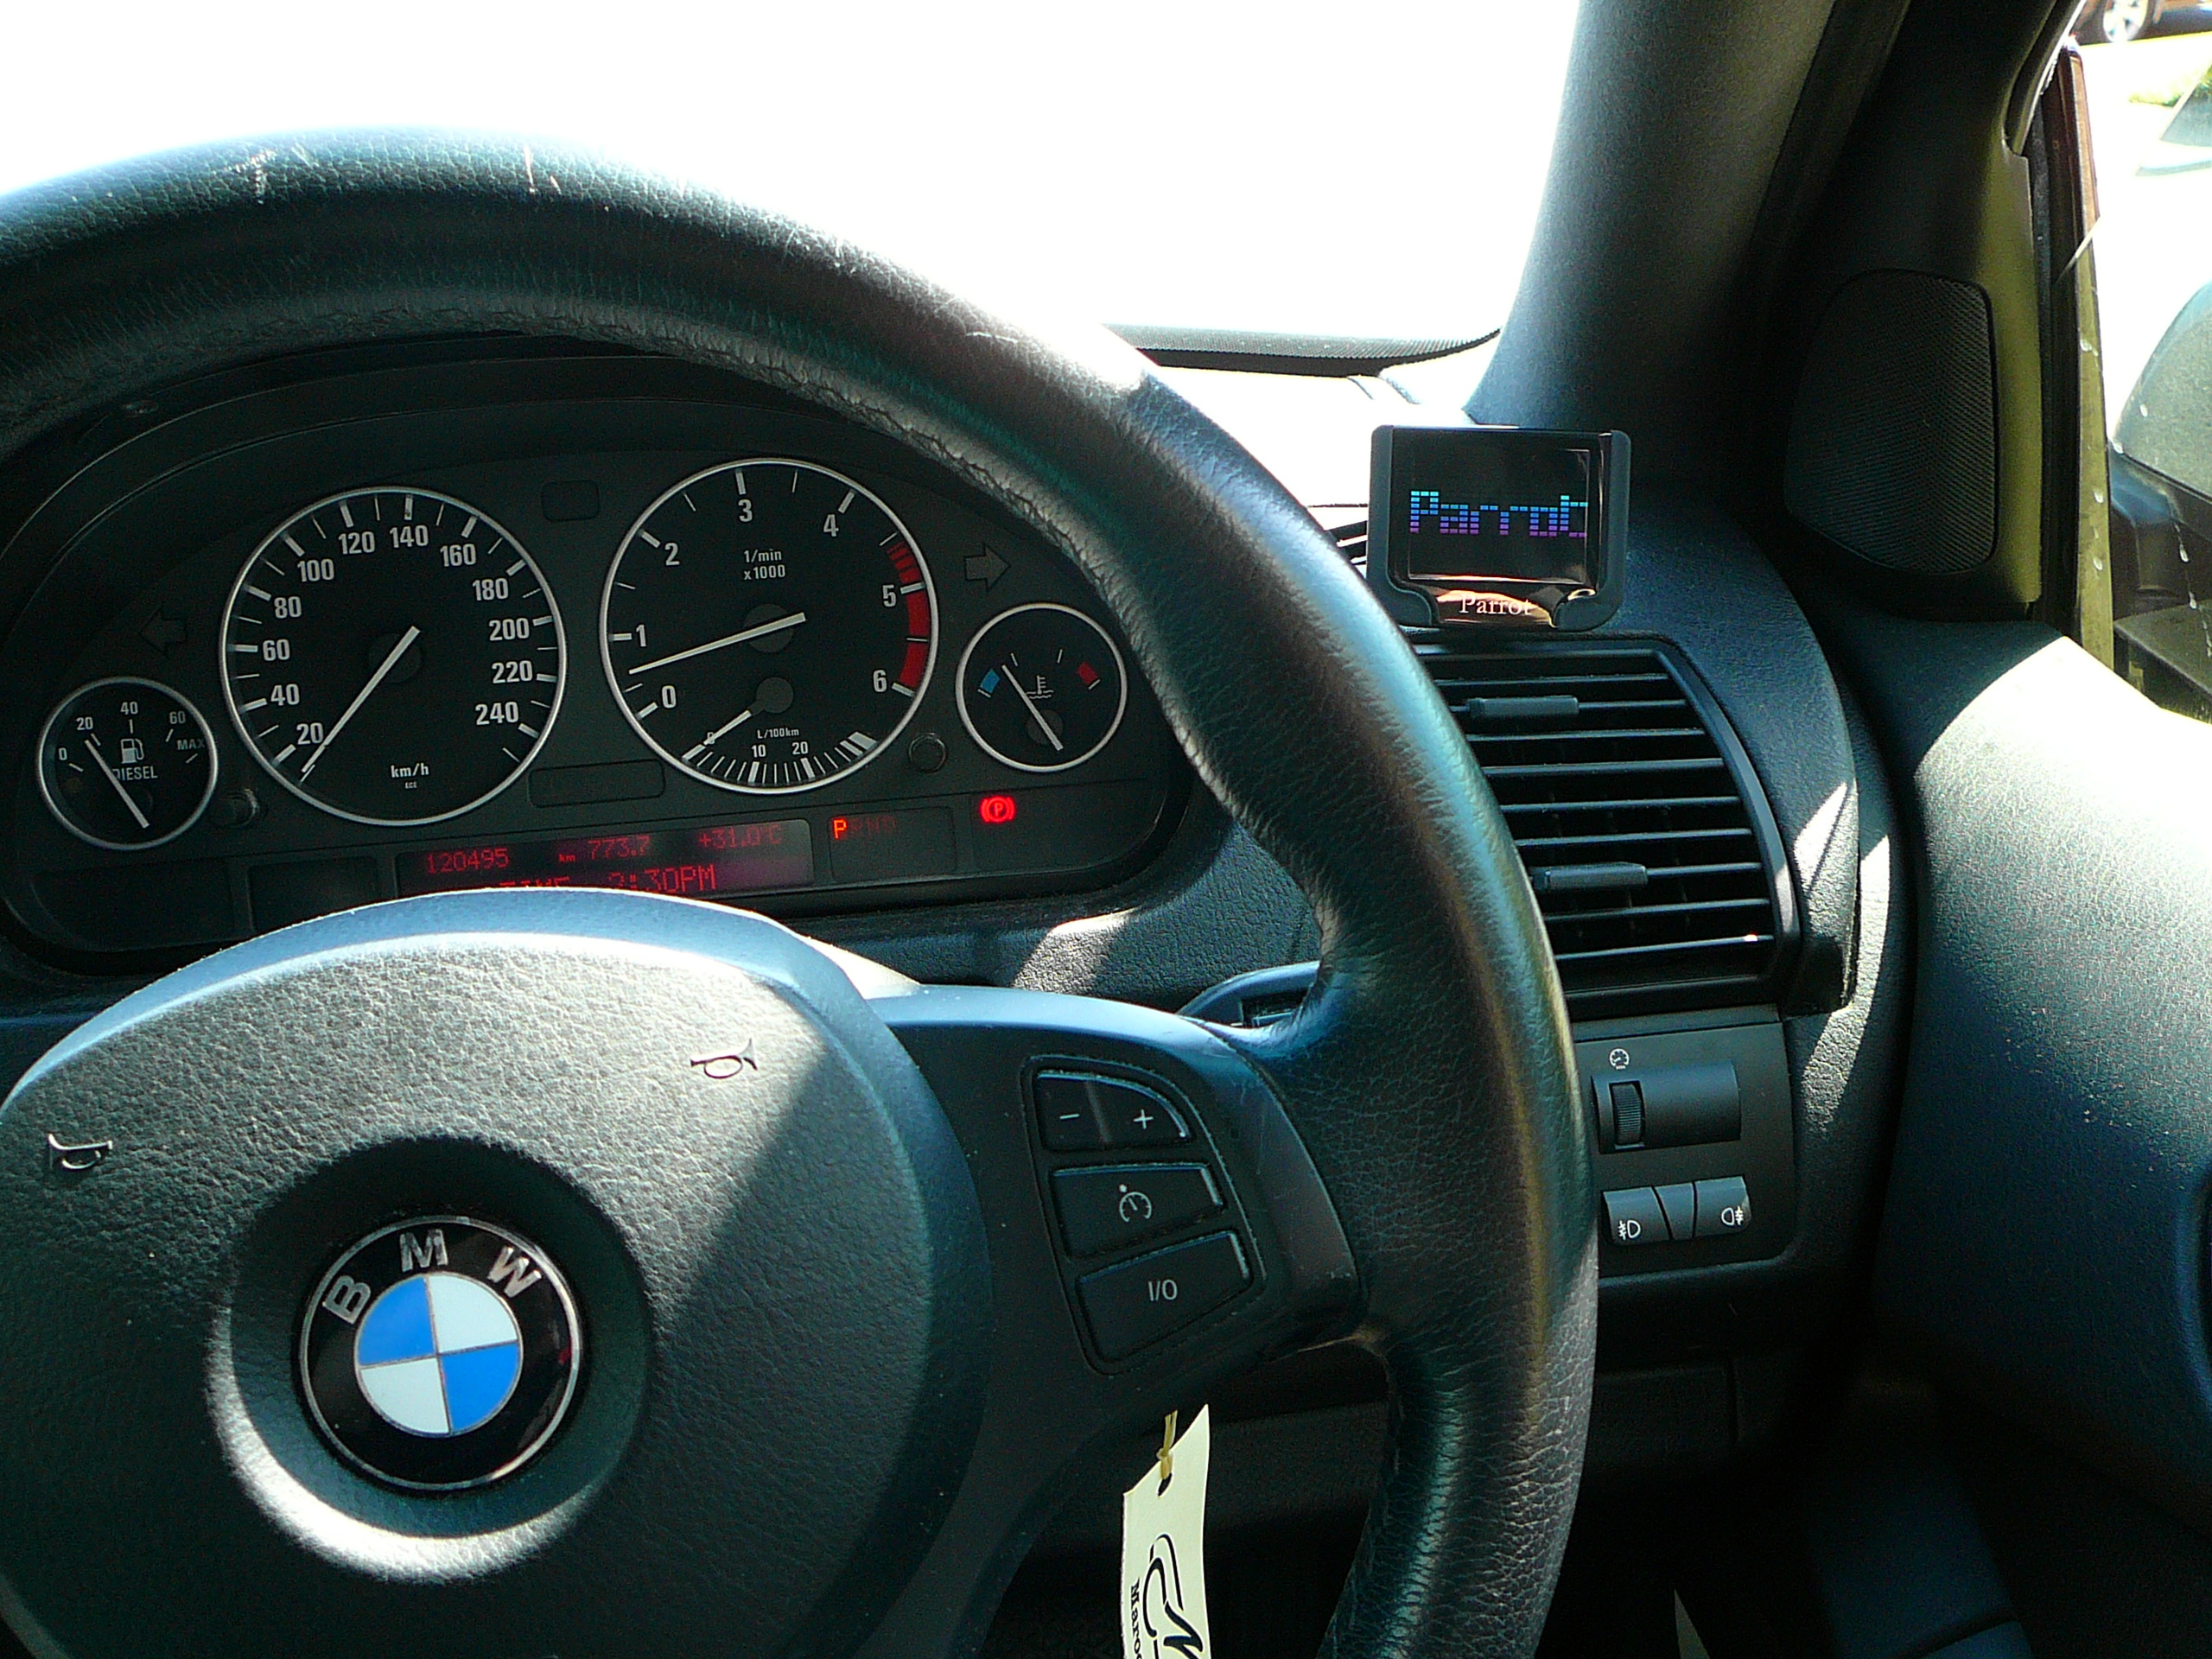 BMW X5 Parrot Mki 9200 Bluetooth Phone kit Installation